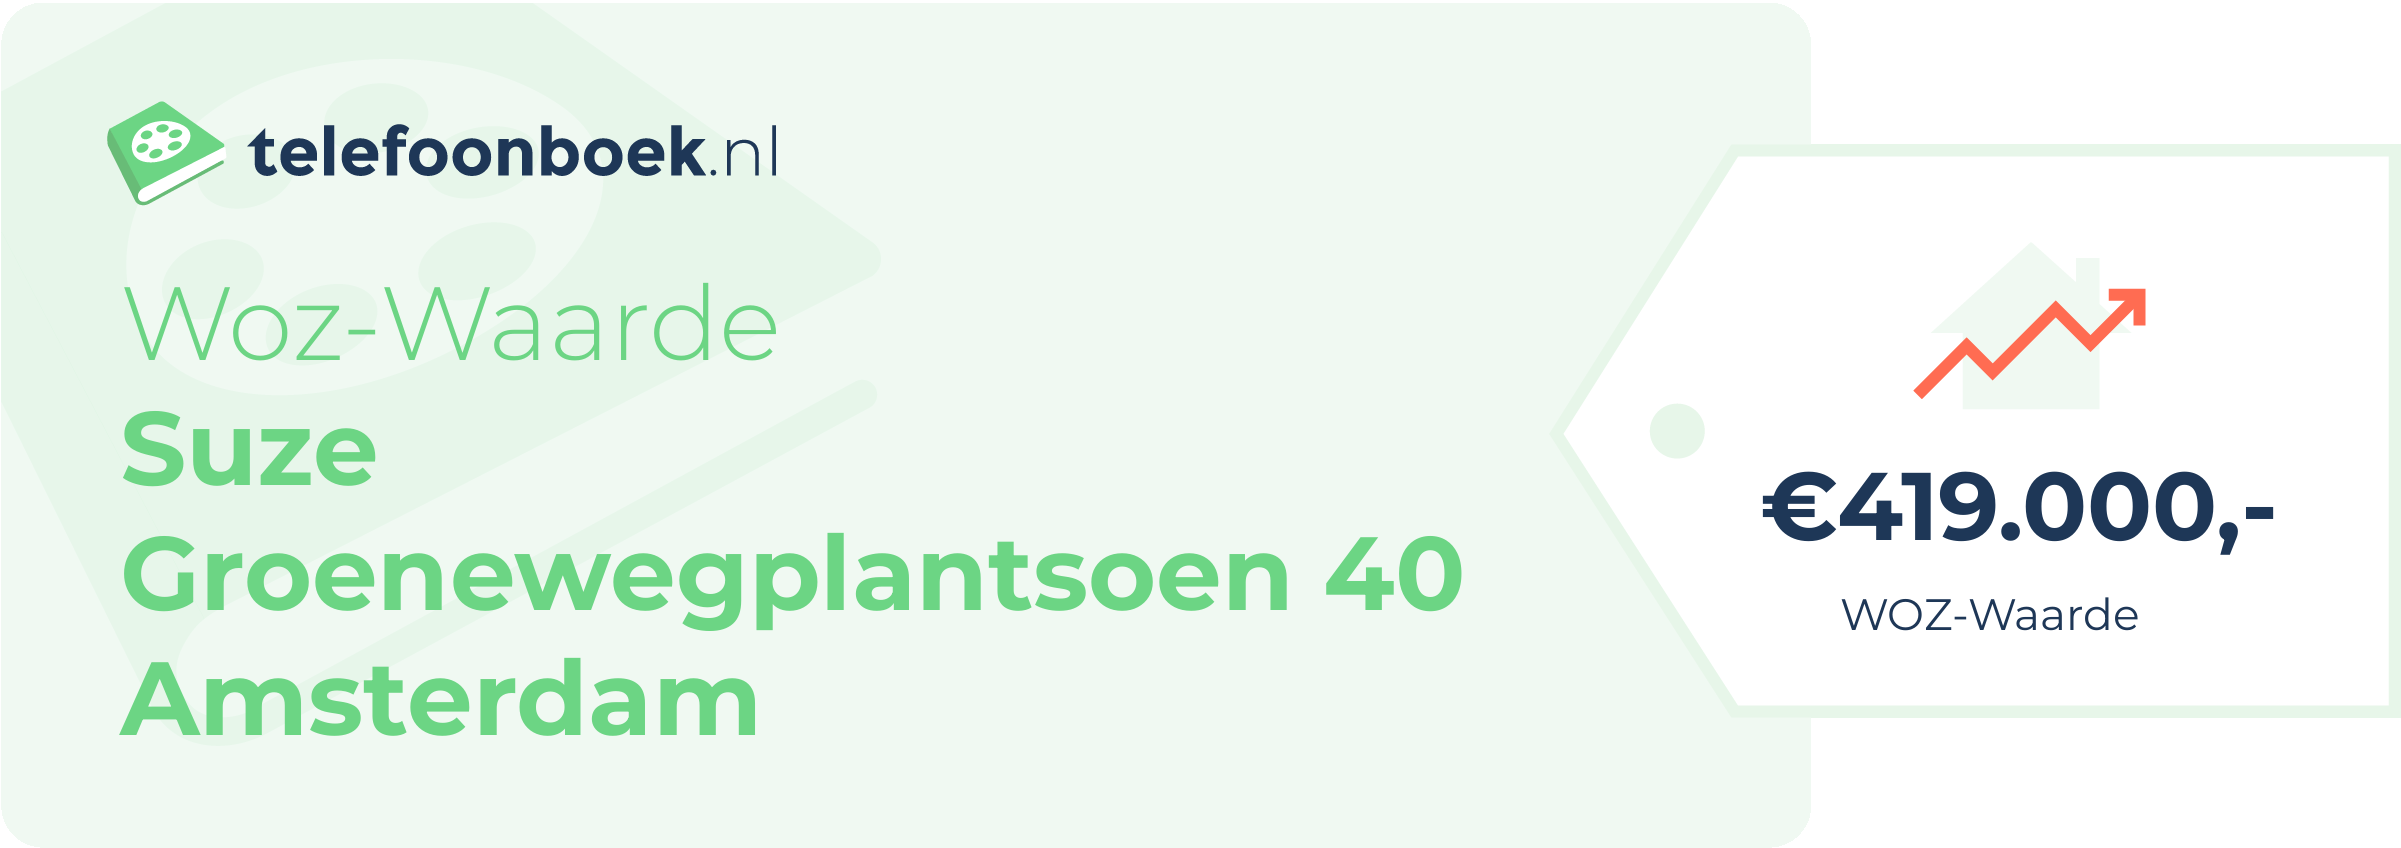 WOZ-waarde Suze Groenewegplantsoen 40 Amsterdam